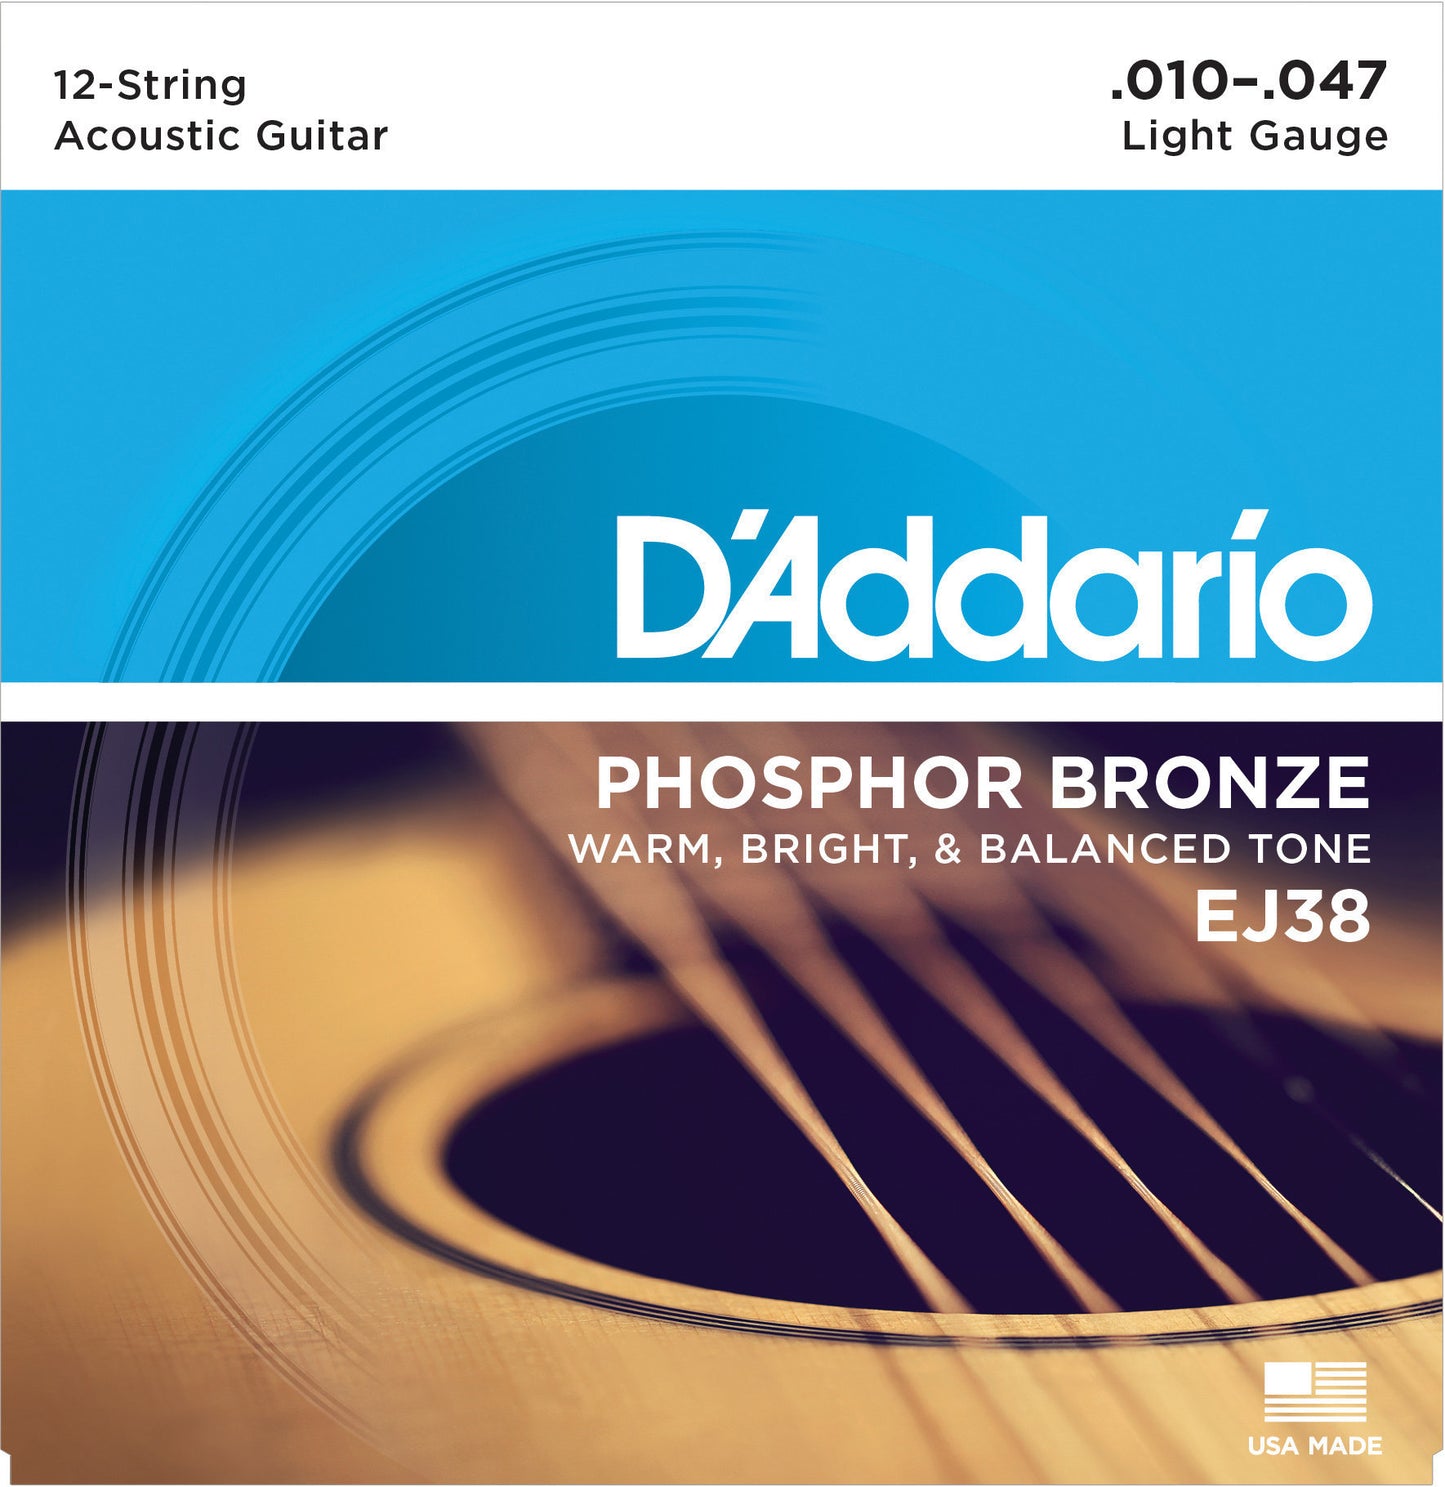 D'addario Phosphor Bronze Acoustic Guitar Strings 12 String